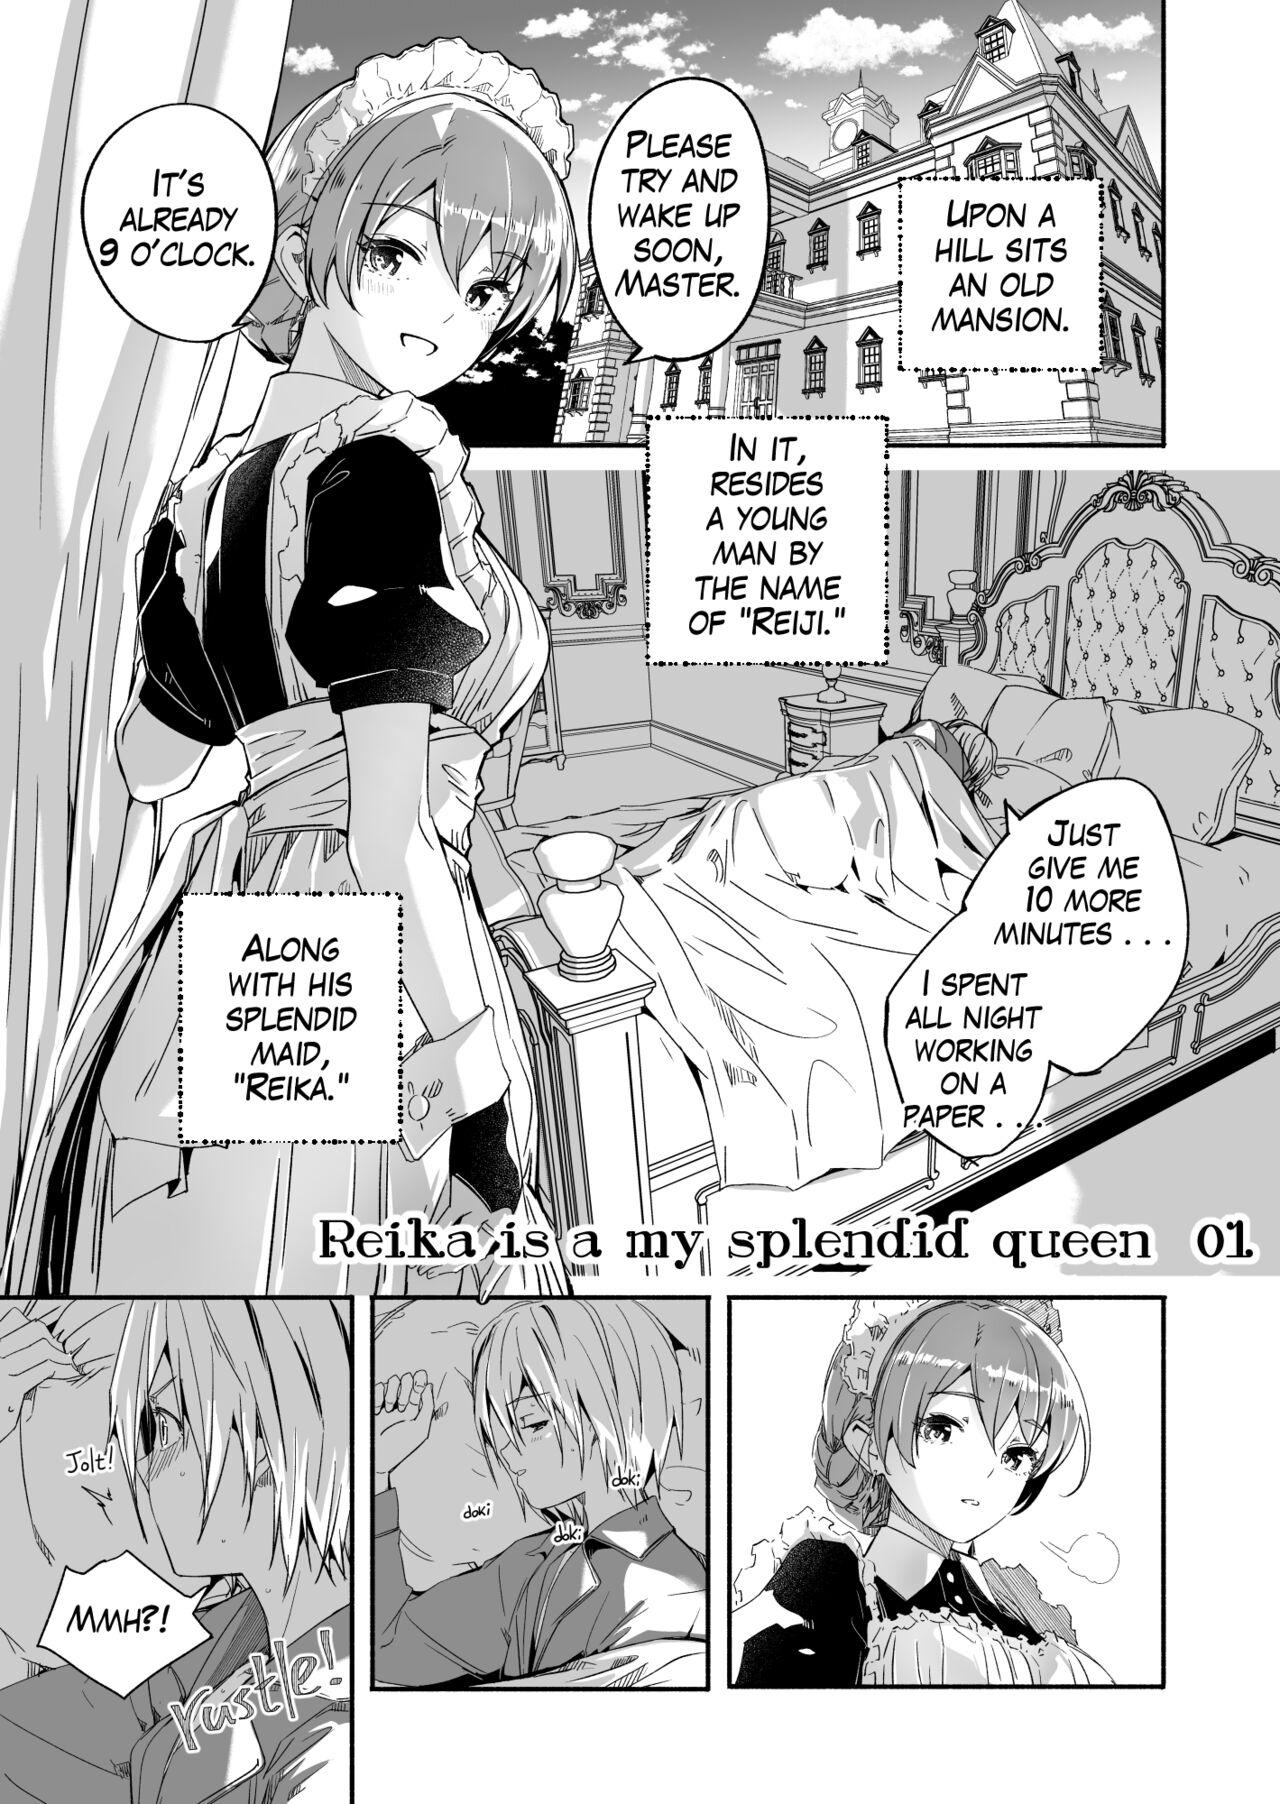 Reika is a my splendid Queen #01 0